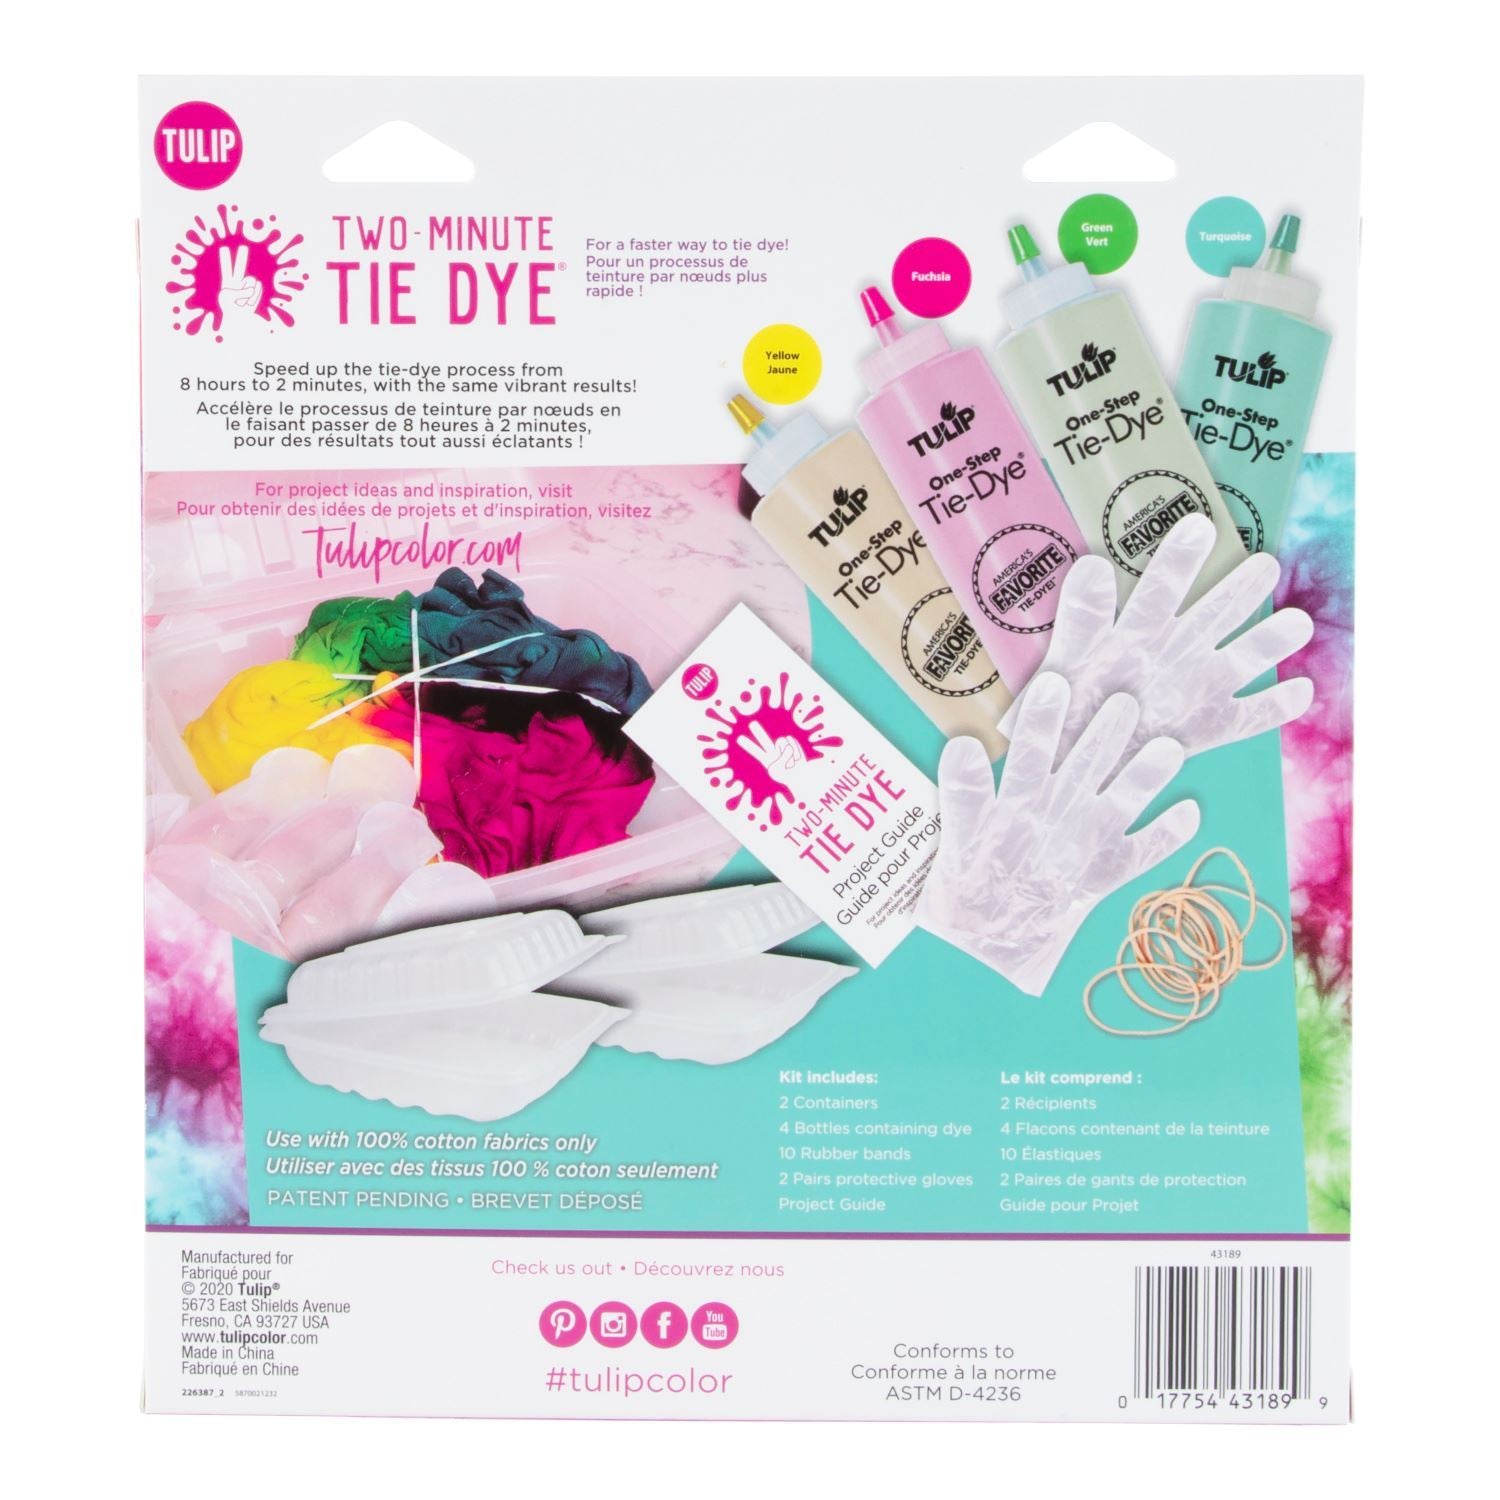 How to Tie-Dye: Tie-Dye Supplies 2020